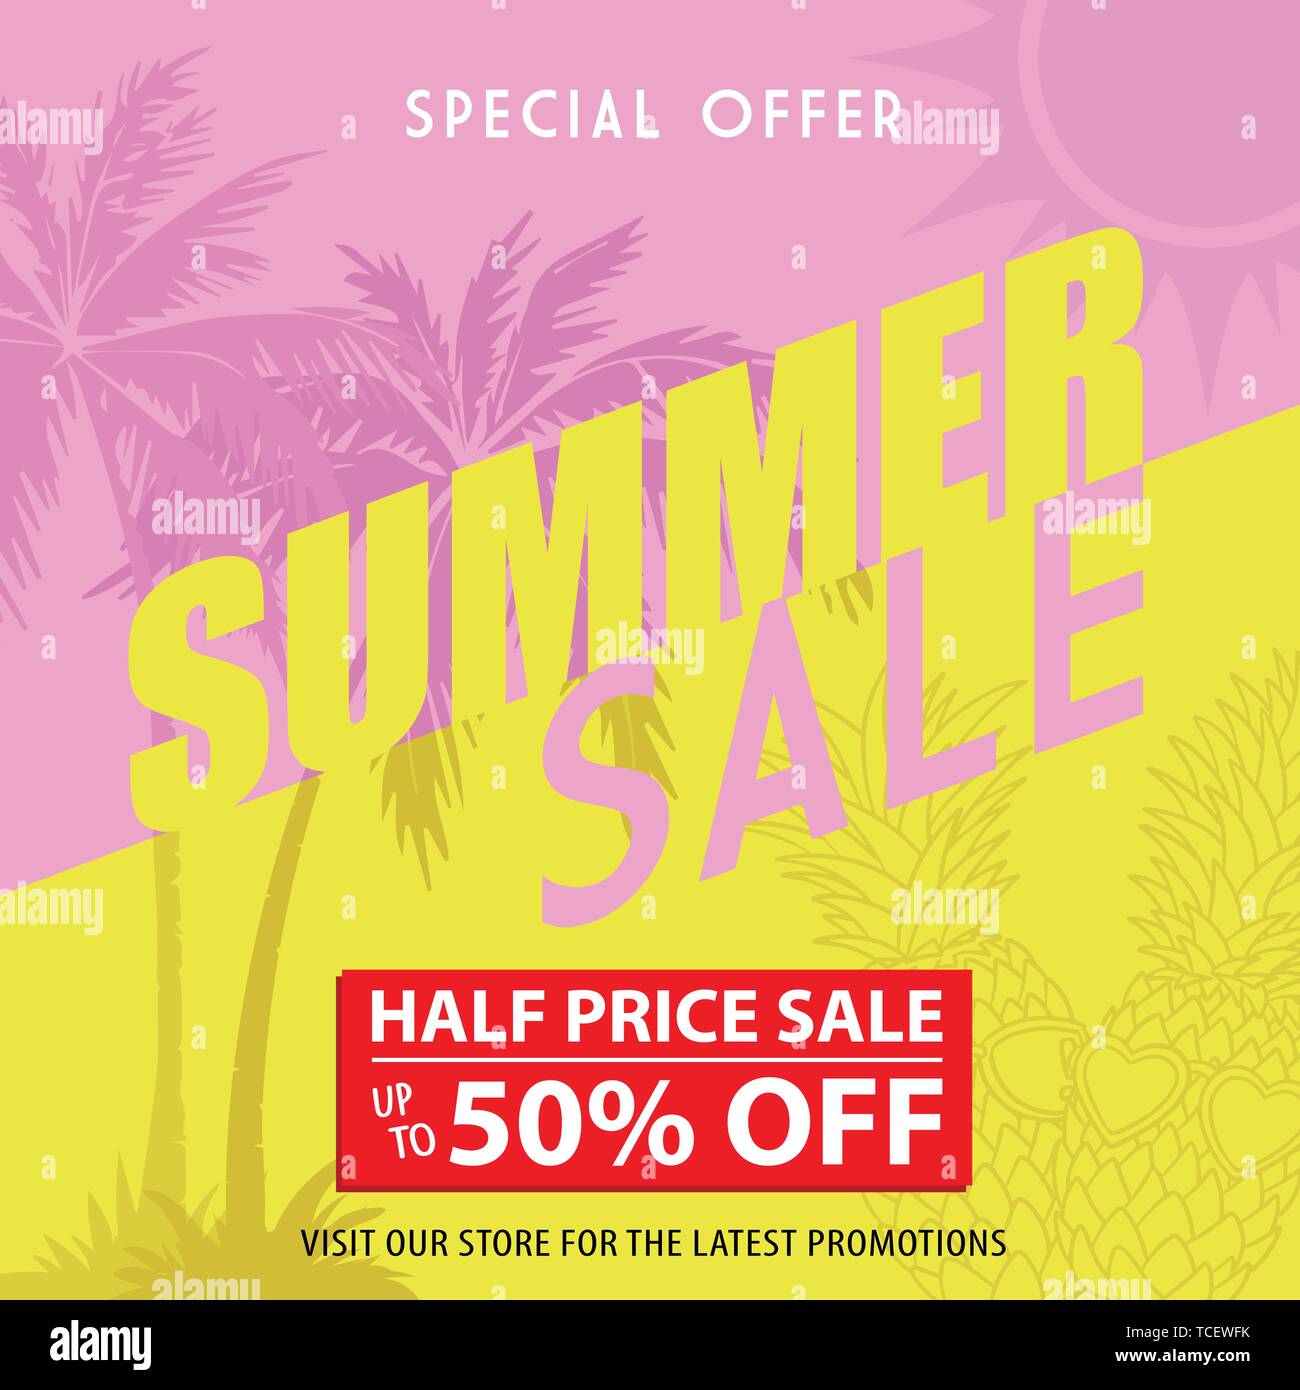 Summer Sale banner design template. Special offer Half price sale promotion, up to 50% off. Square frame. Vector illustration. Stock Vector